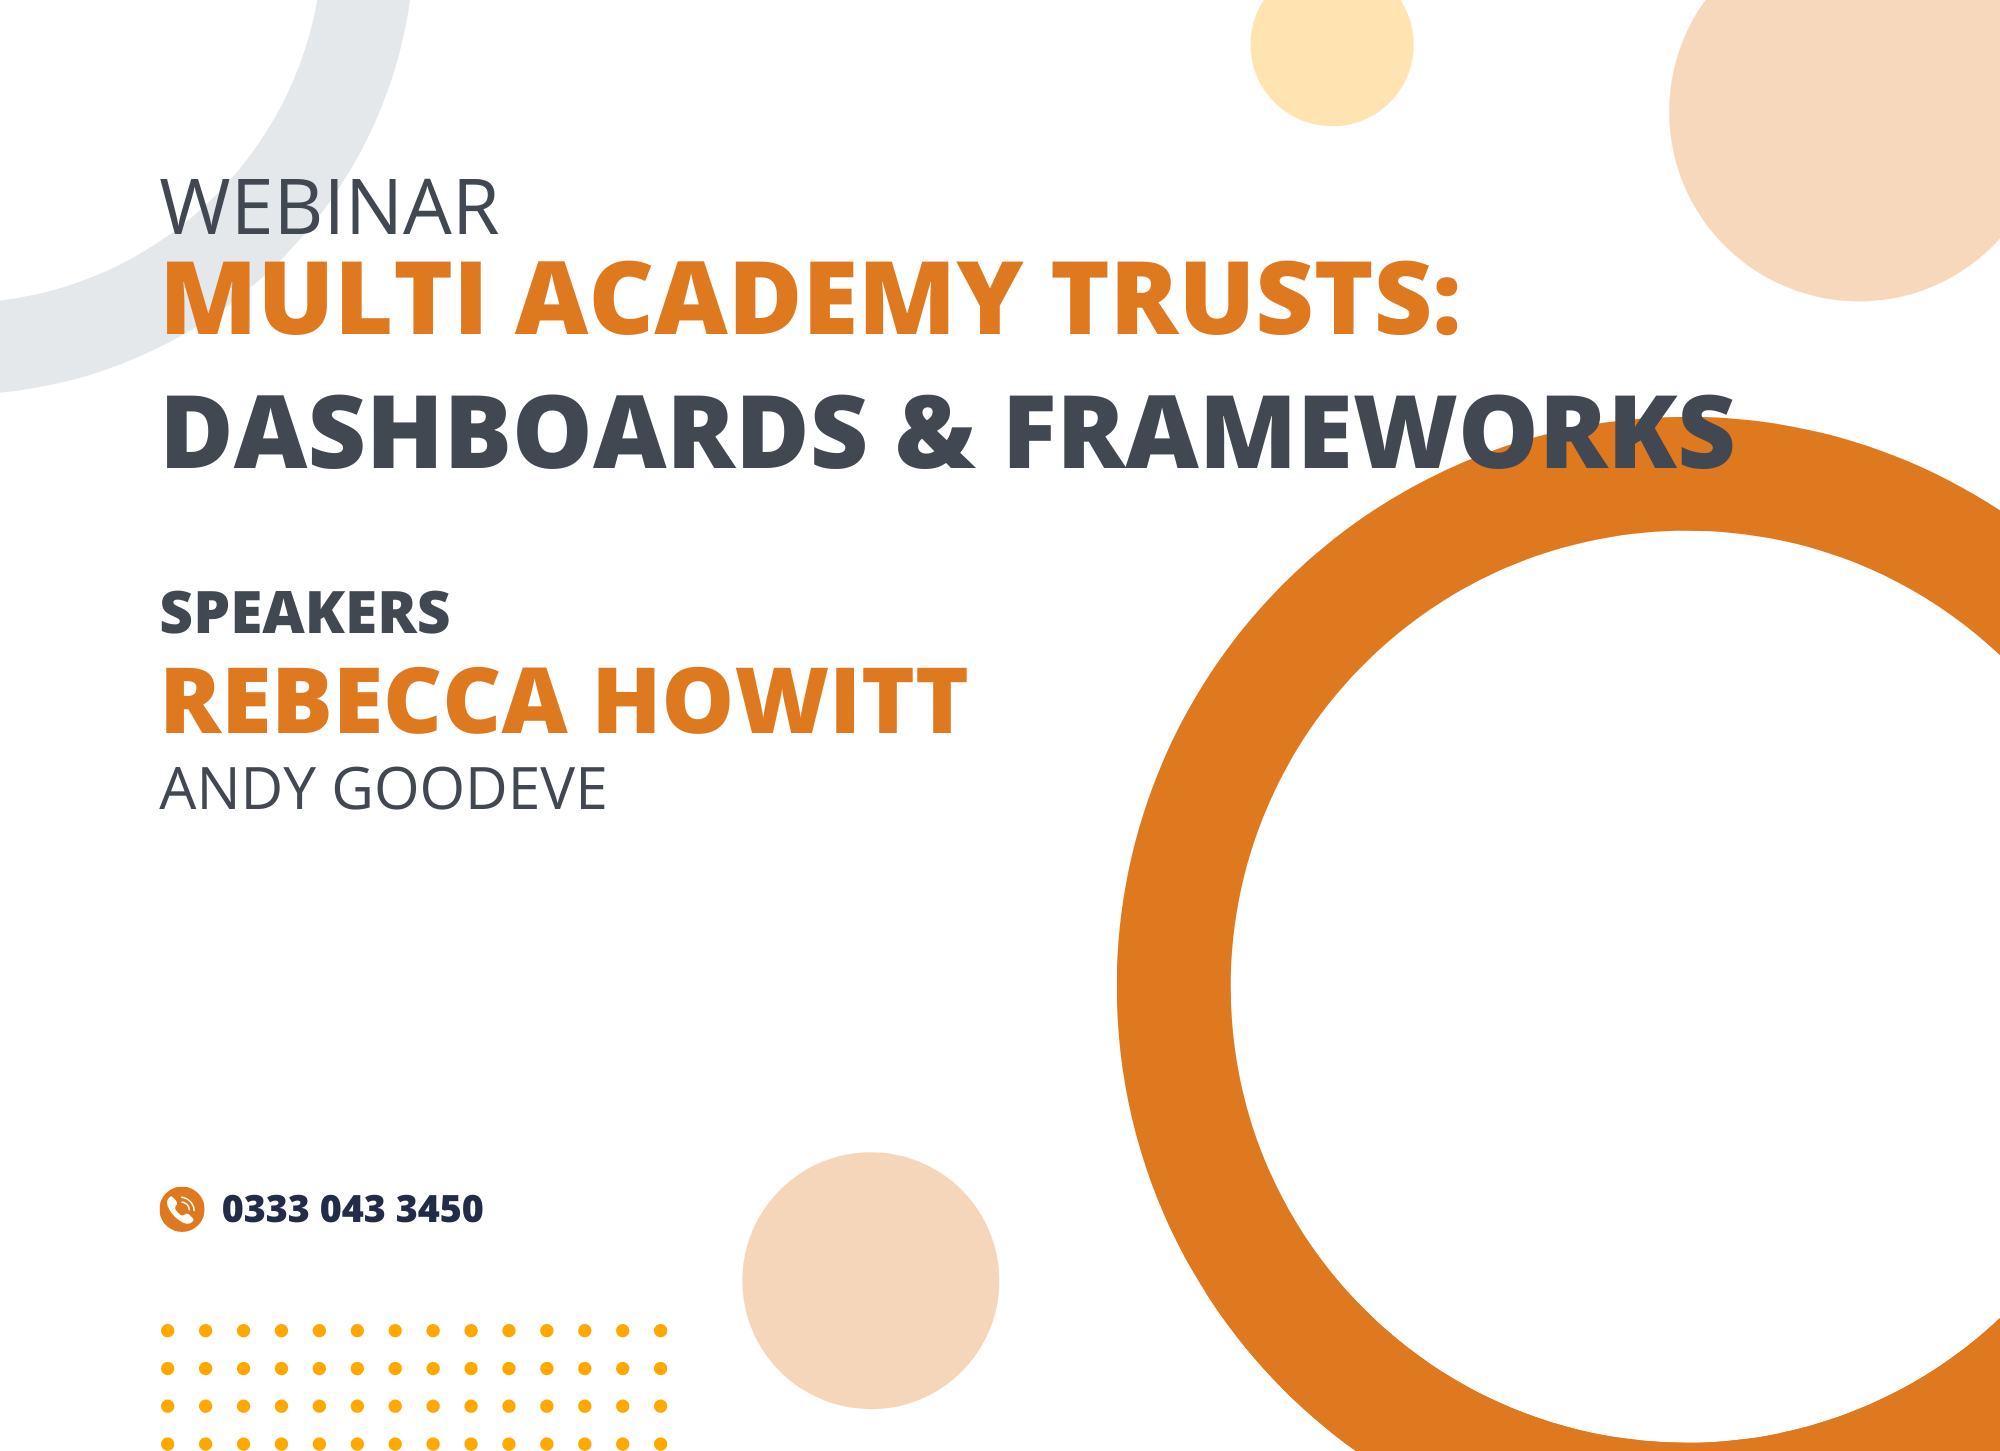 Multi Academy Trusts: Dashboards & Frameworks